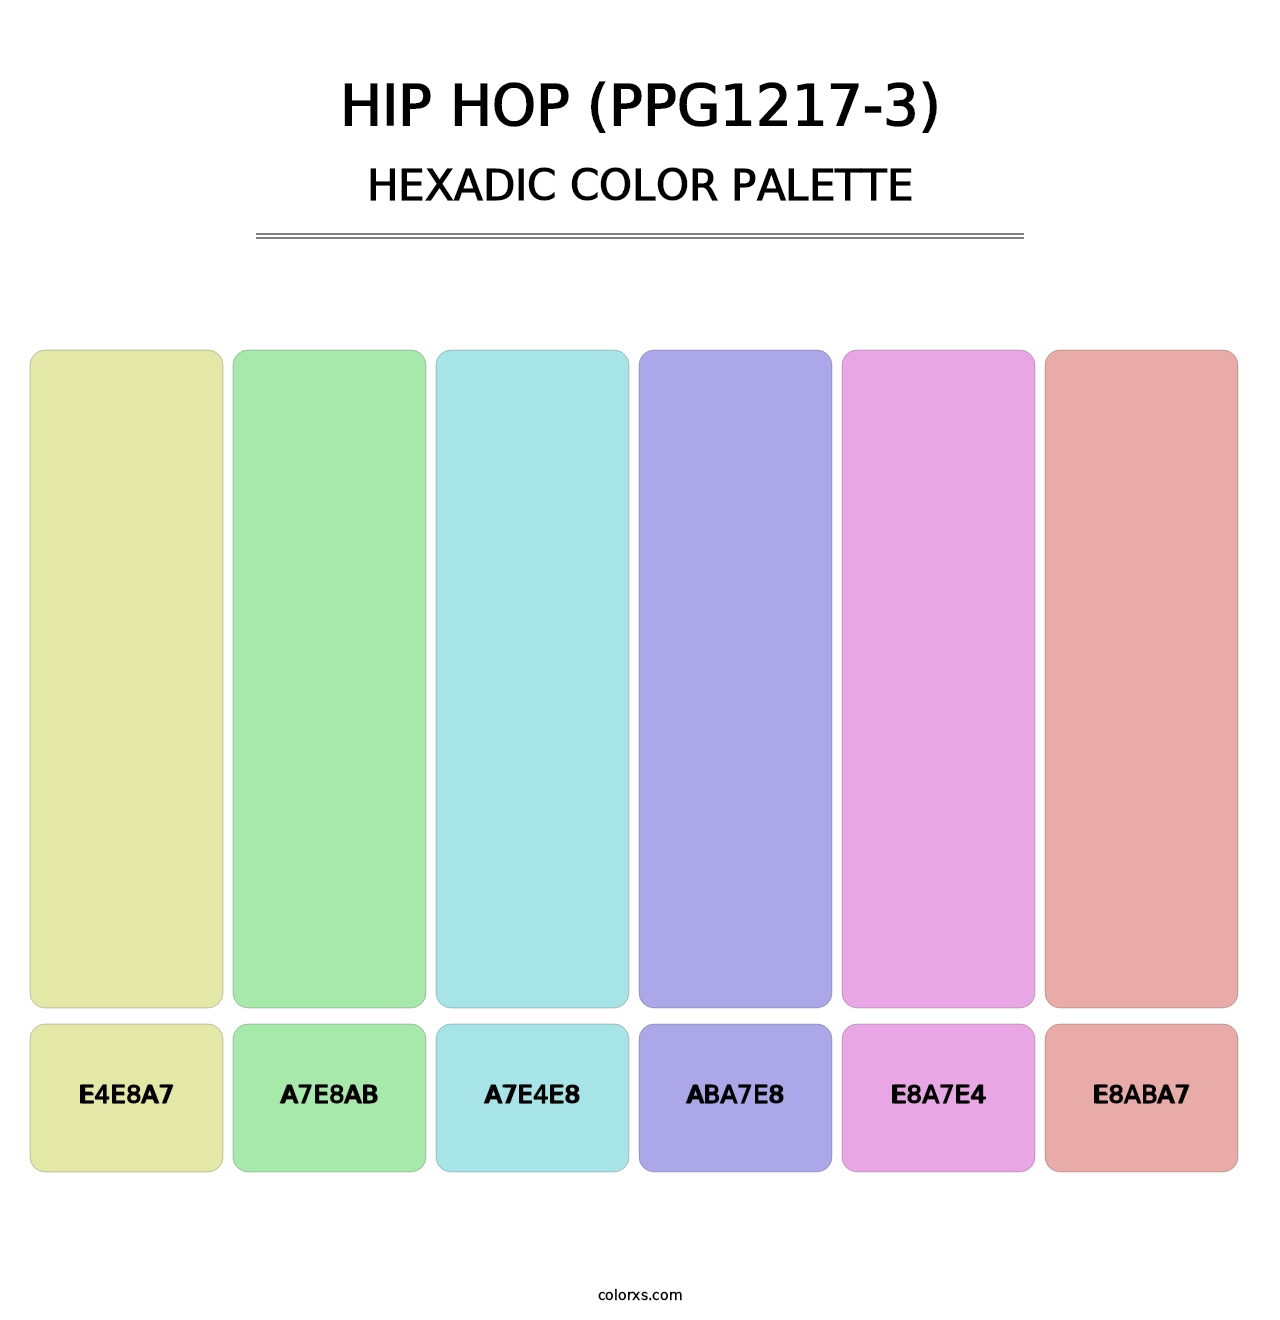 Hip Hop (PPG1217-3) - Hexadic Color Palette